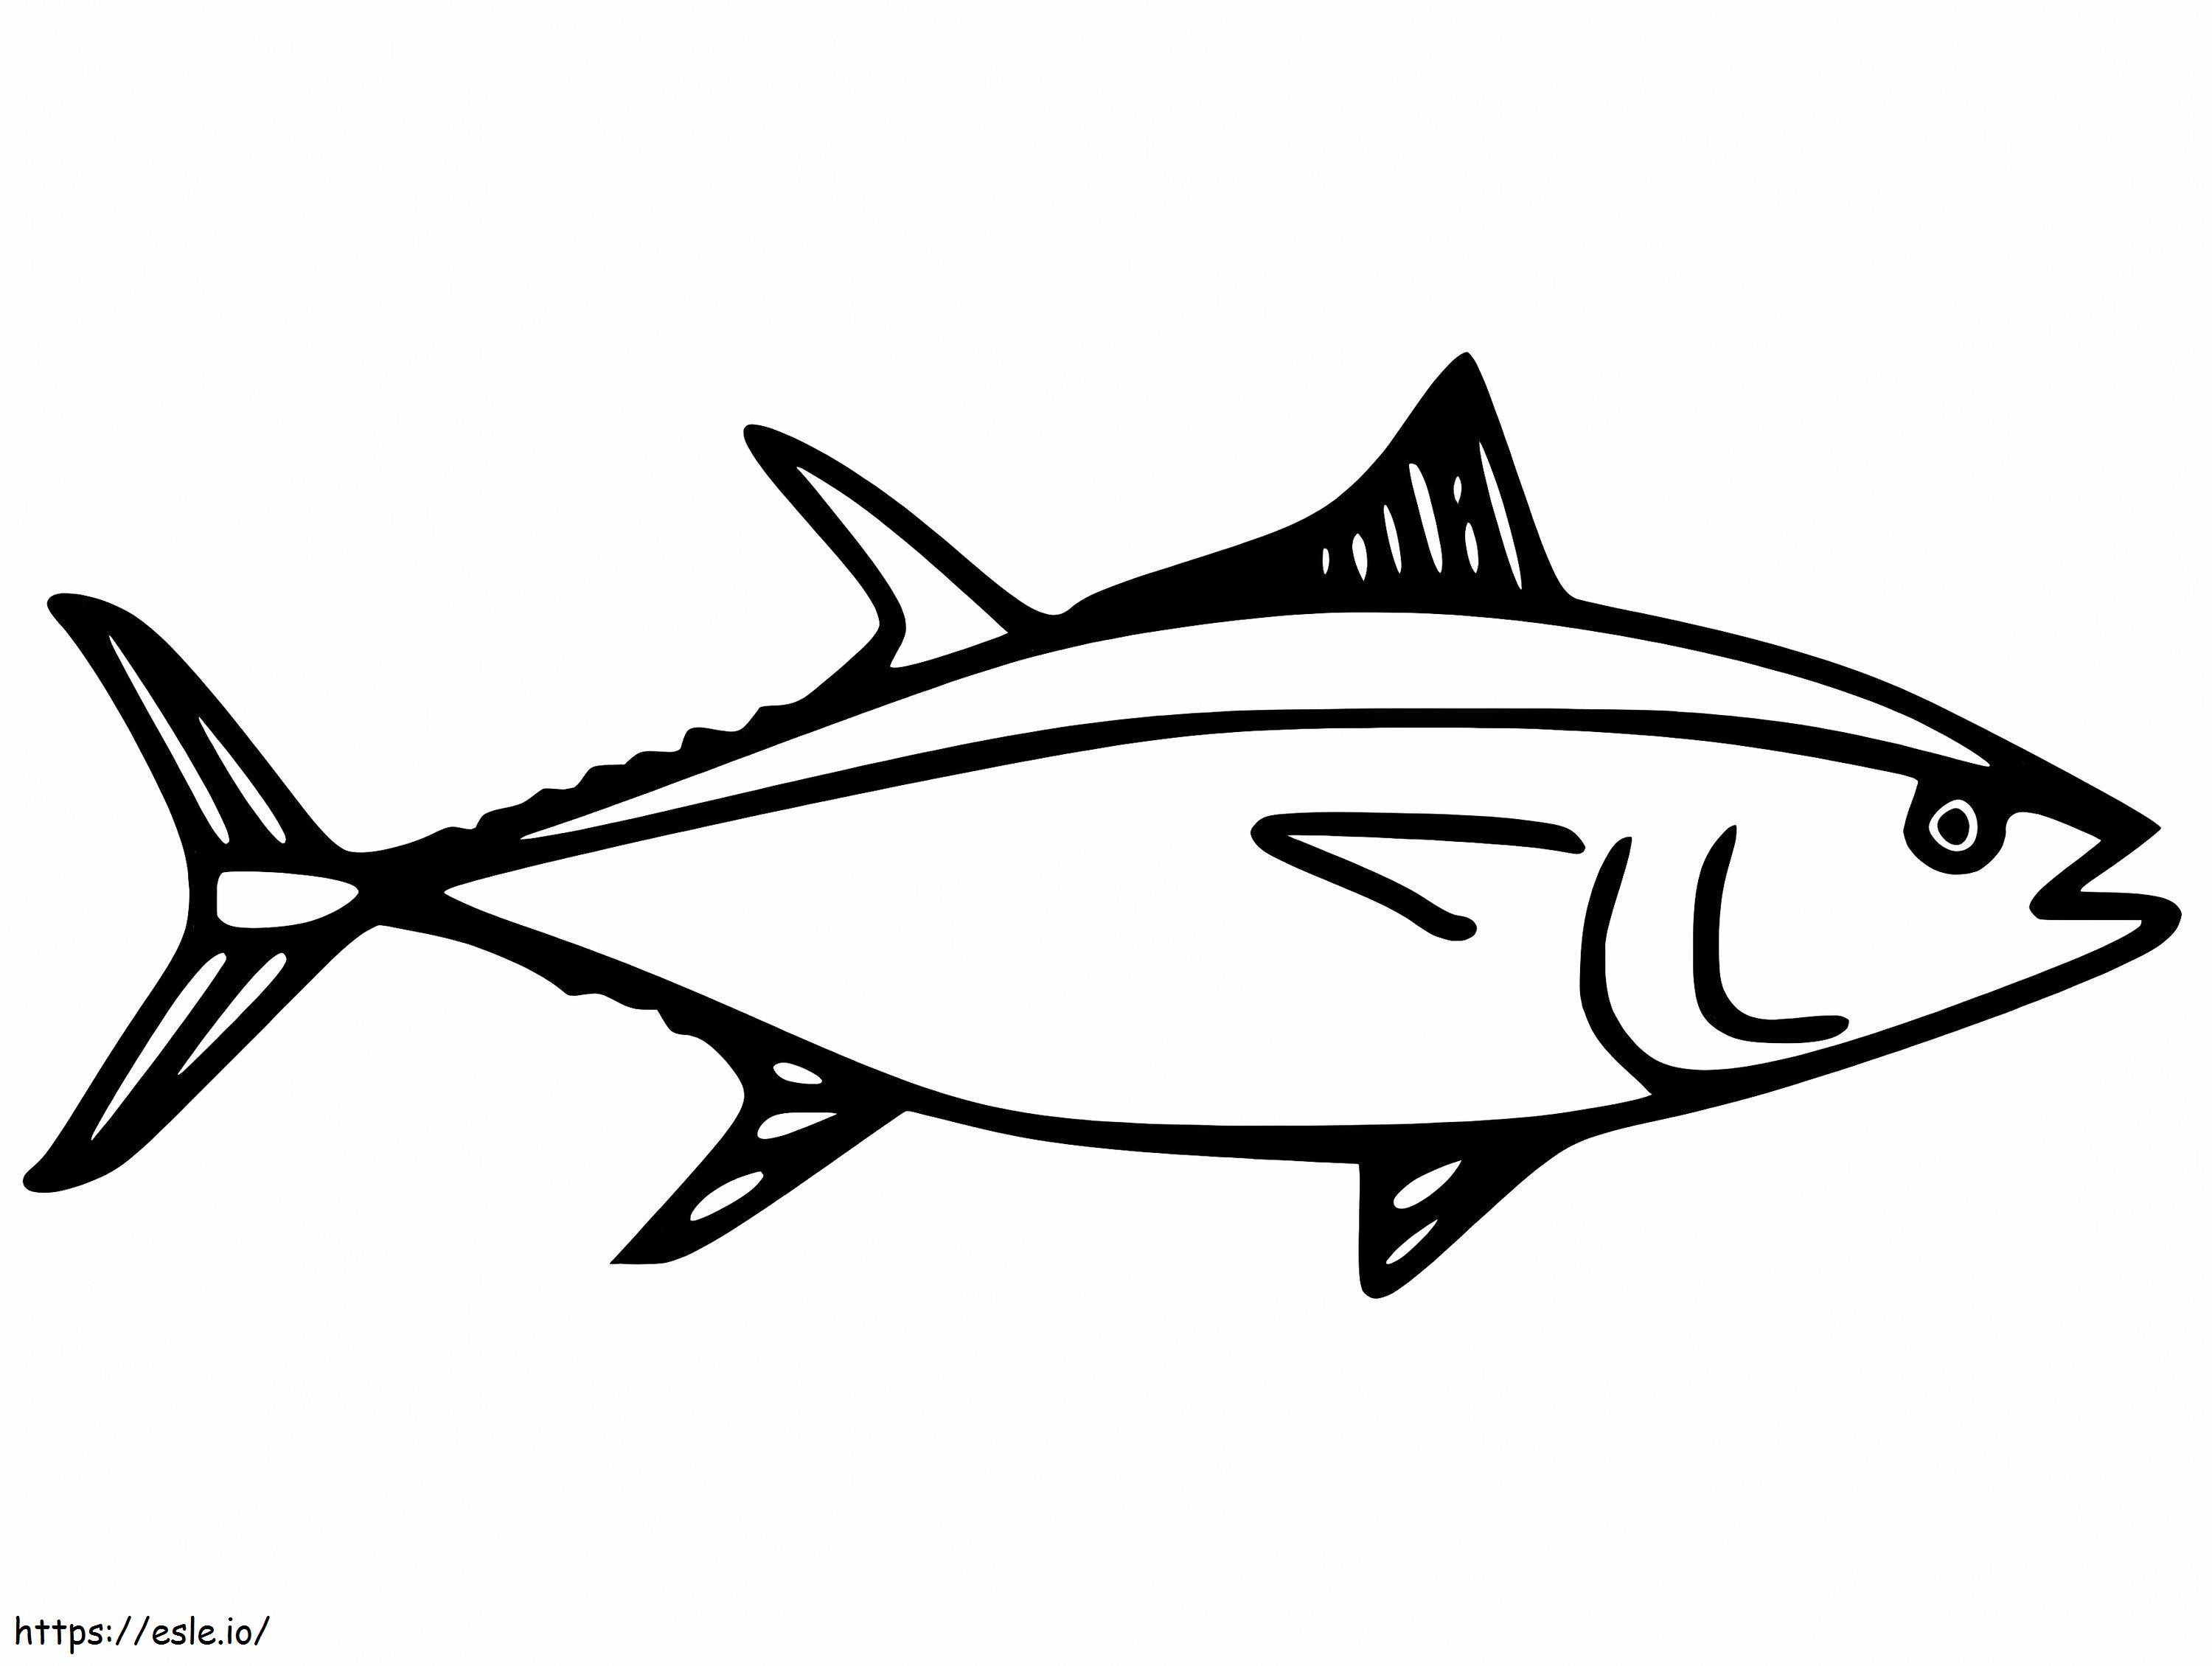 Skipjack tonhal kifestő